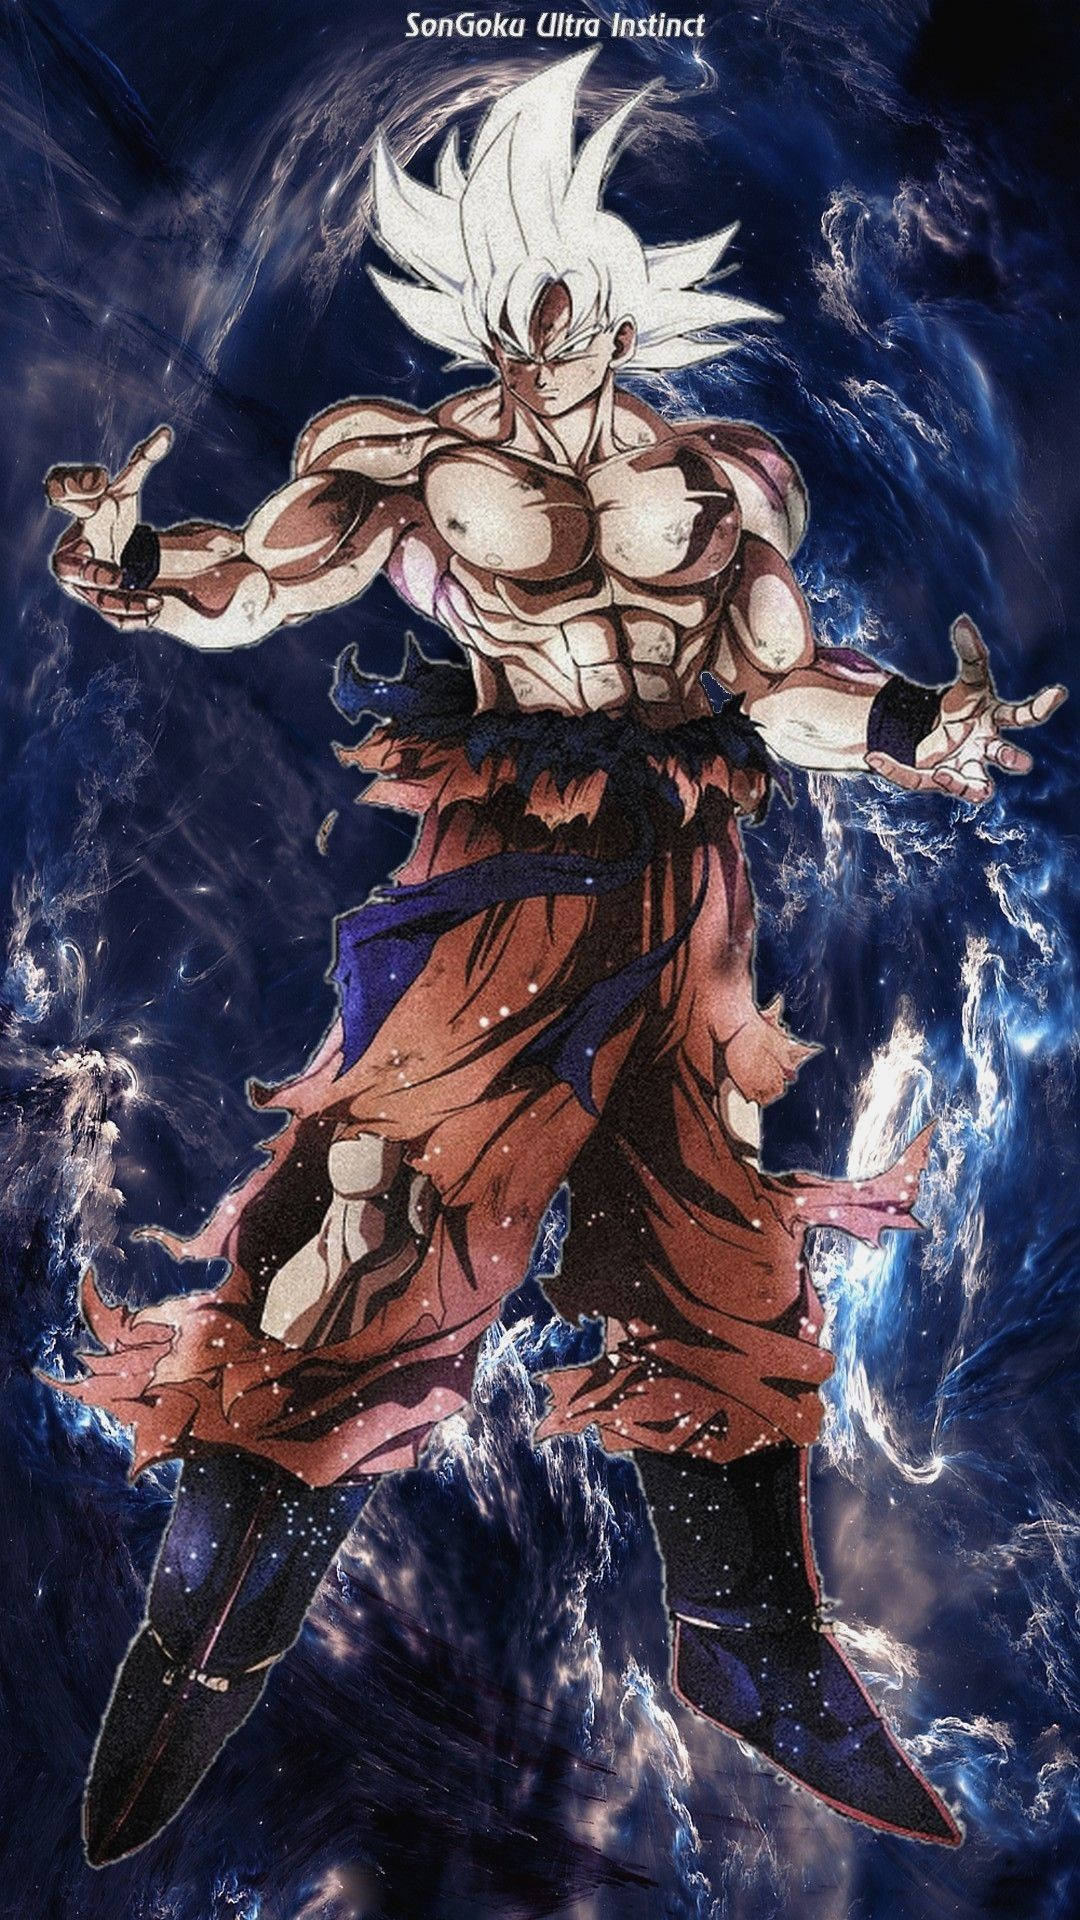 1080X1920 Goku Ultra Instinct Wallpaper and Background